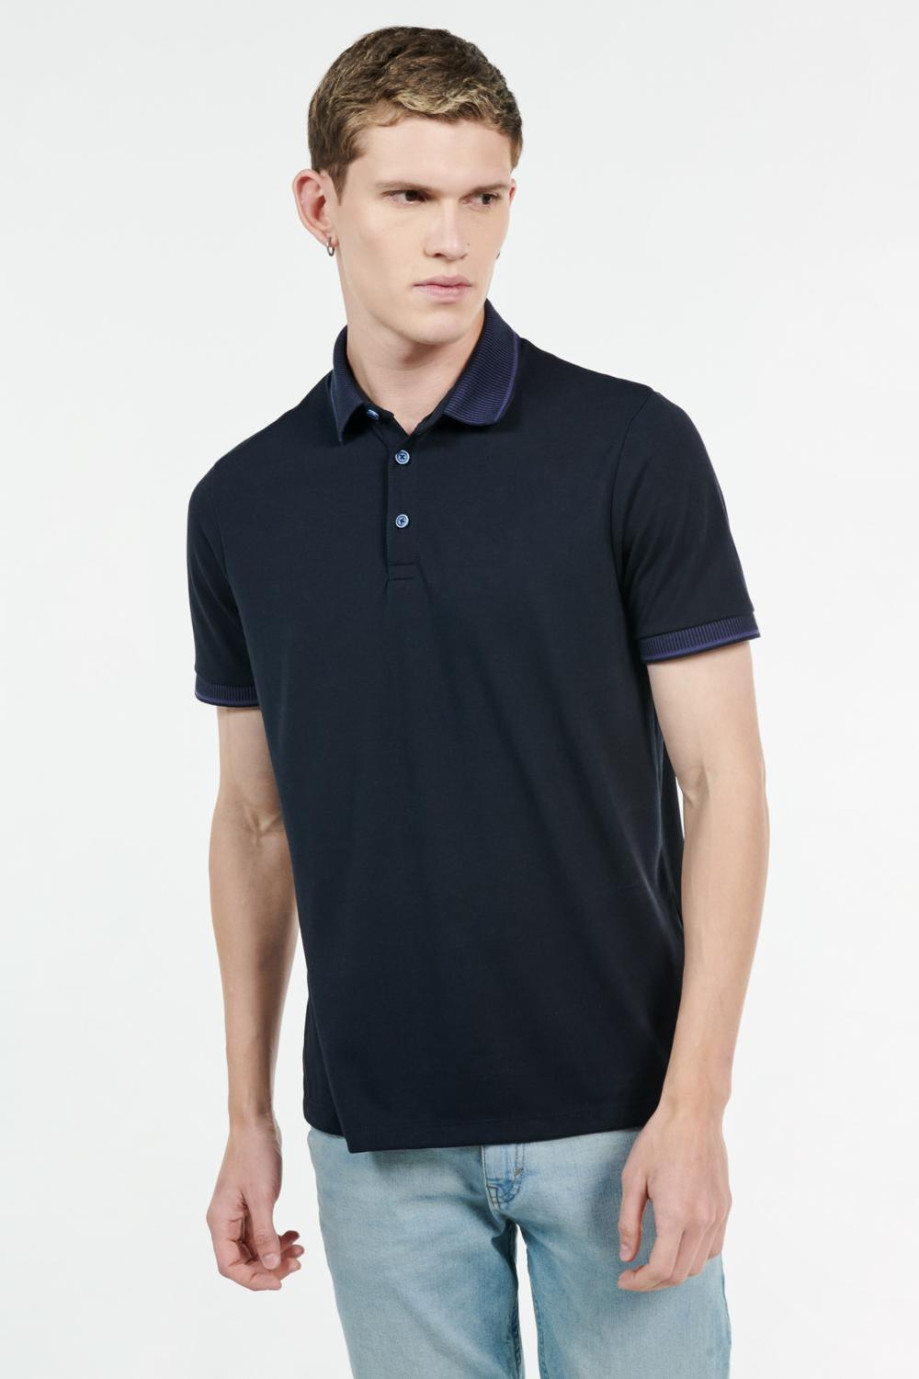 Camiseta polo azul intensa con botones y detalles tejidos